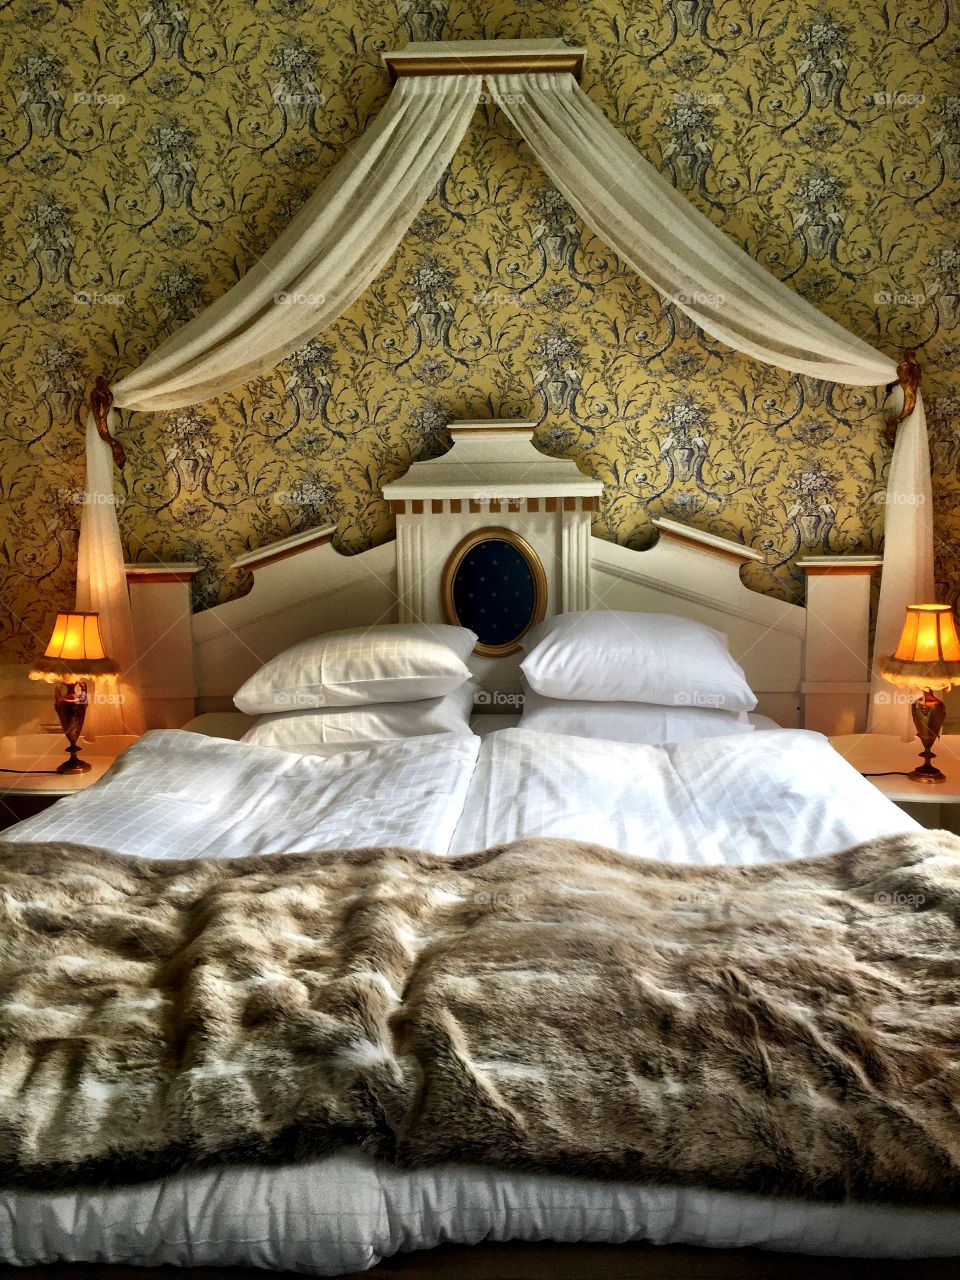 Hotels bedroom . Lovely bedroom 